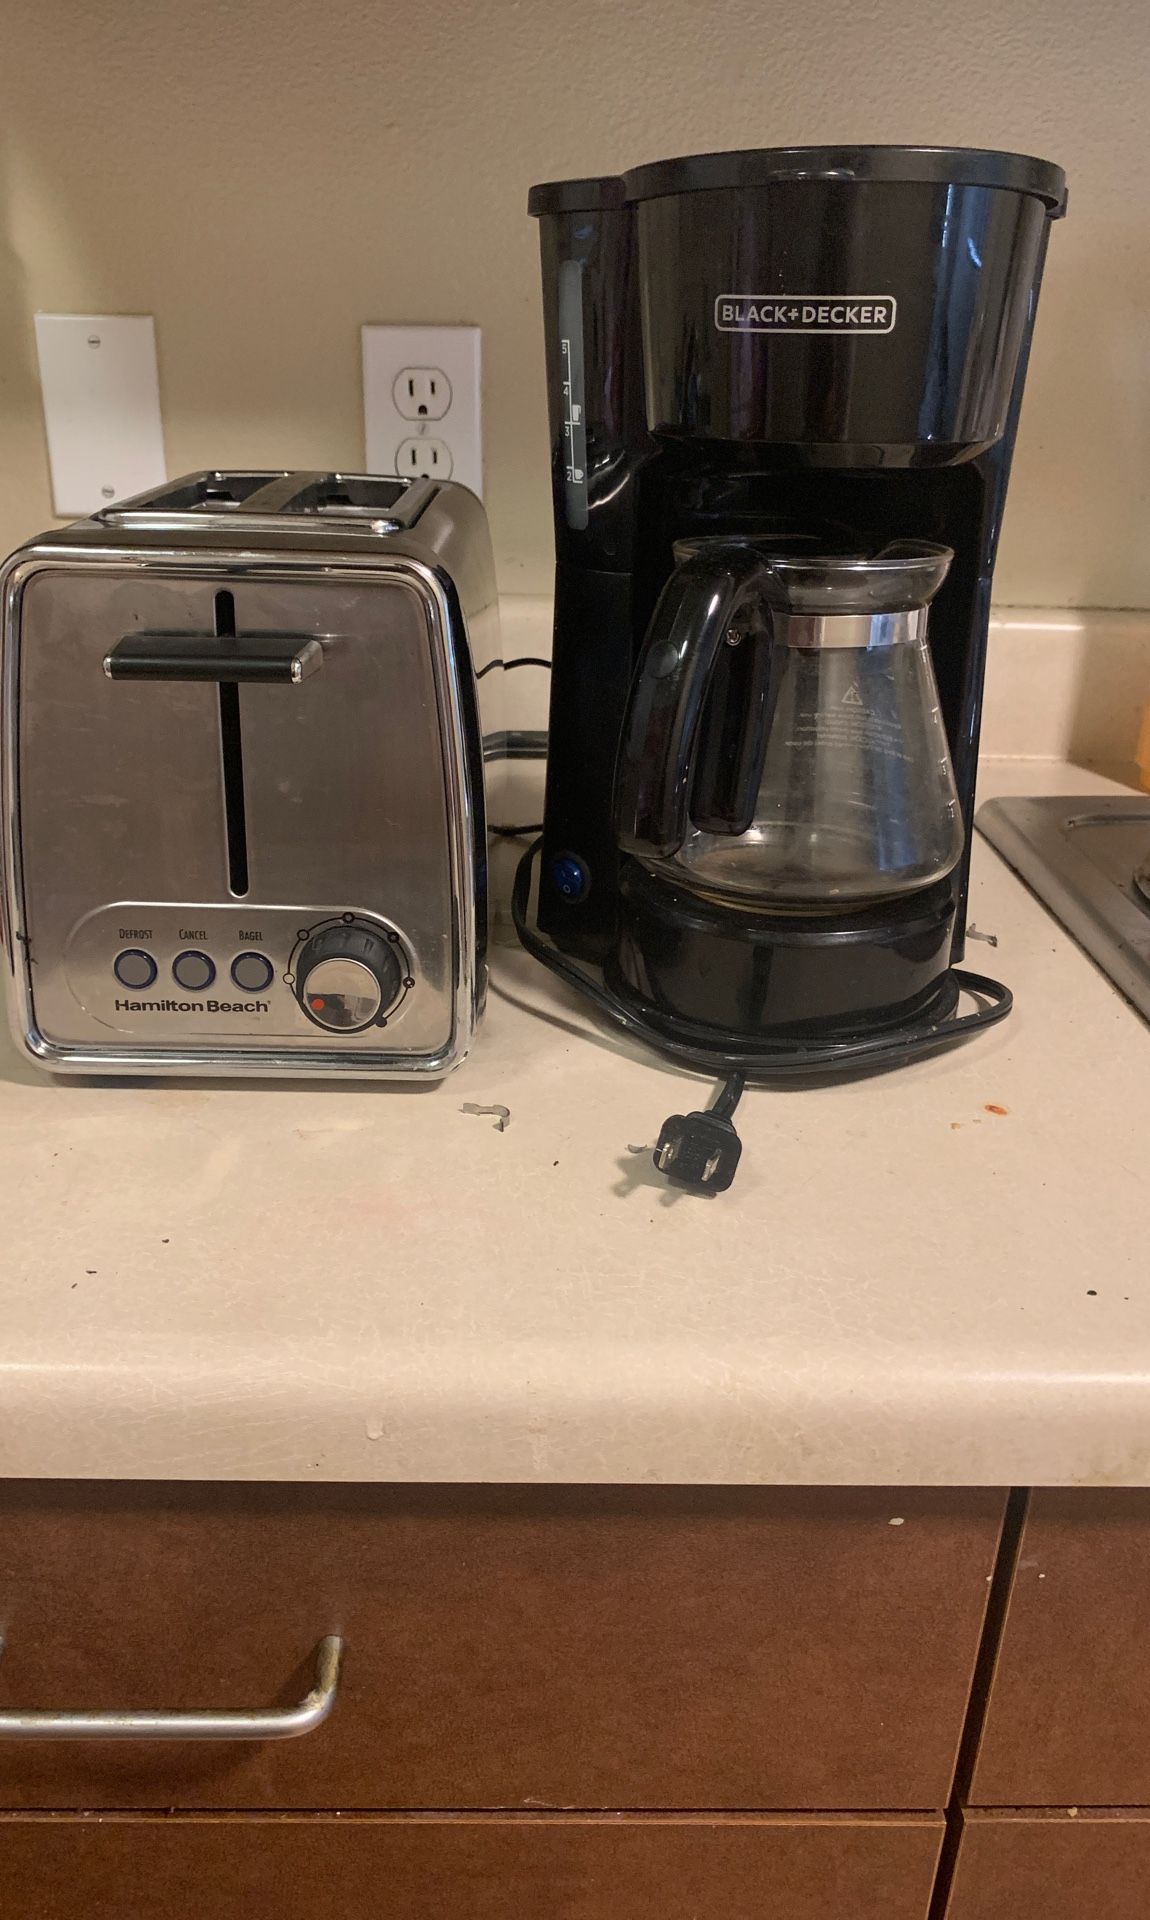 Hamilton beach toaster/ black and decker coffee maker